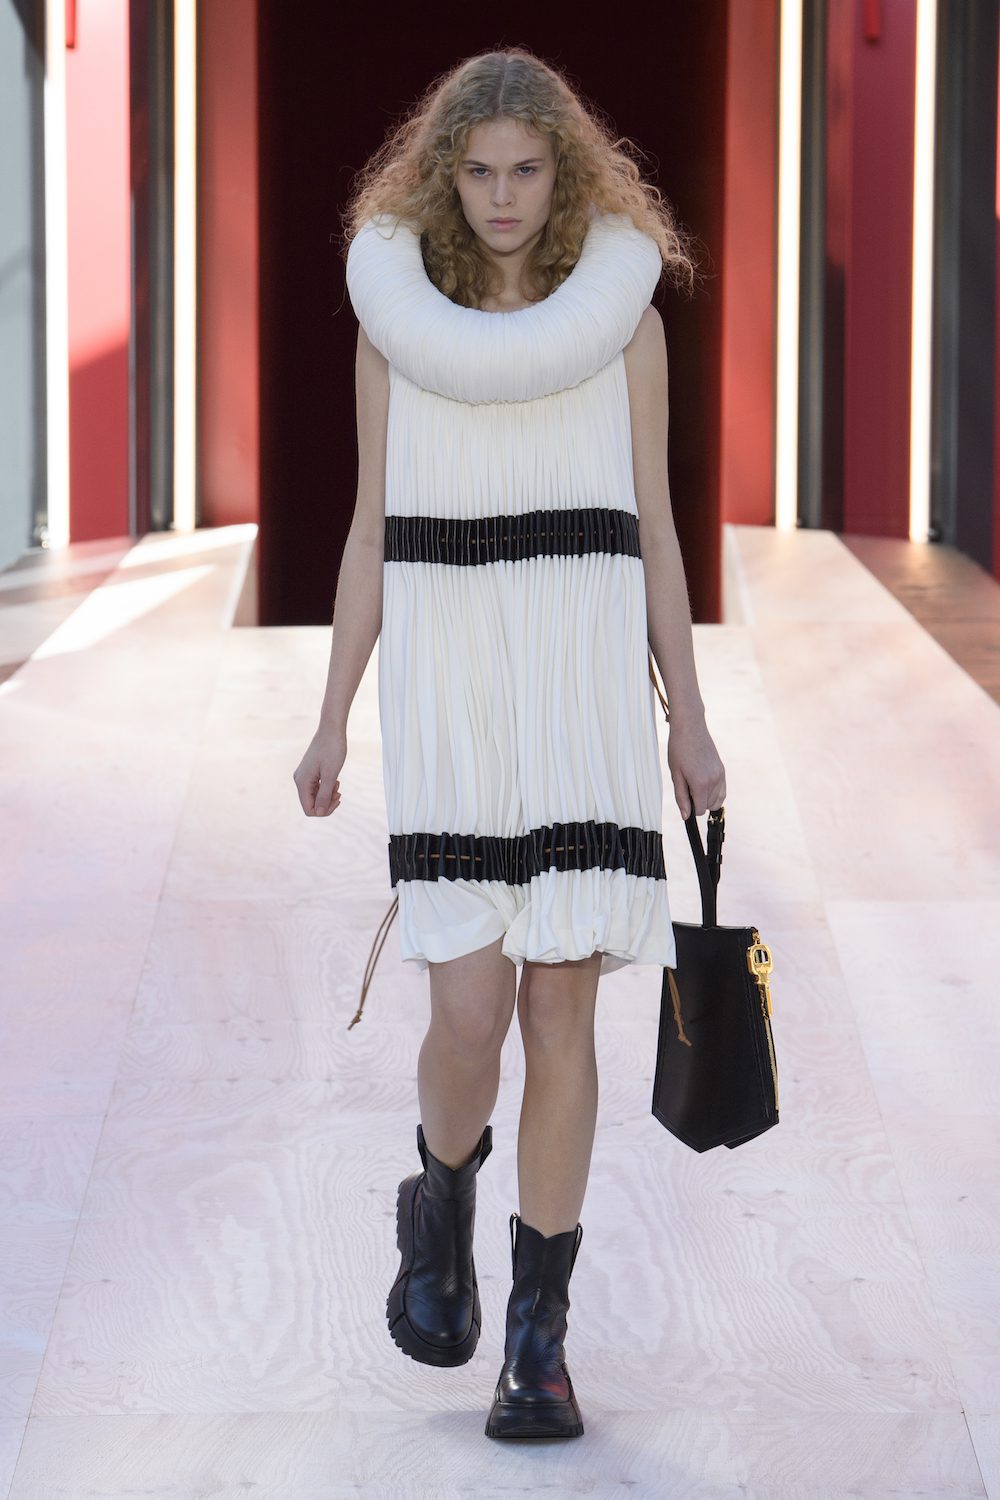 Louis Vuitton presents Spring-Summer 2023 collection exploring femininity